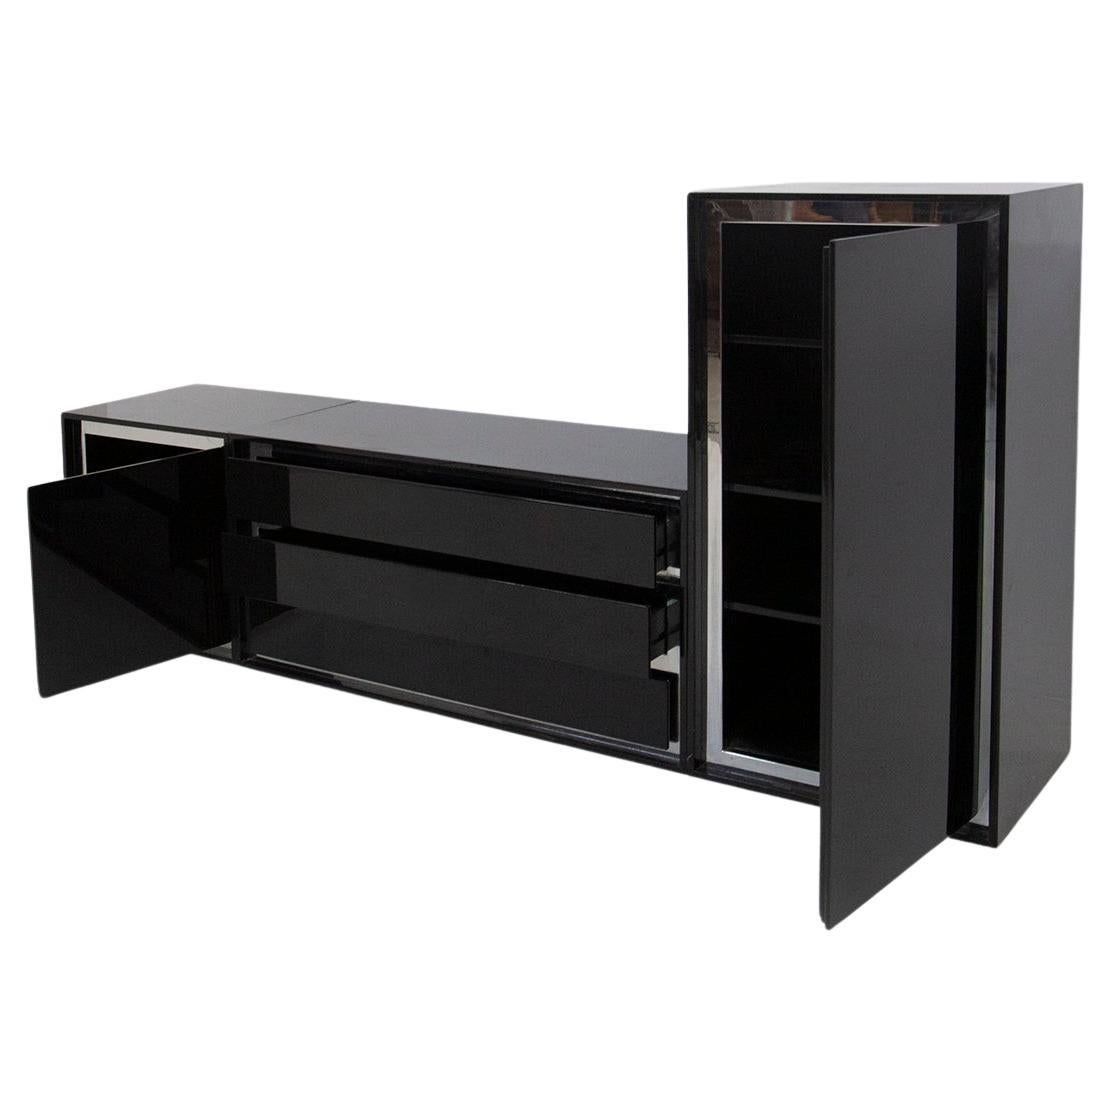 Black living furniture set attr. to Acerbis in steel profiles